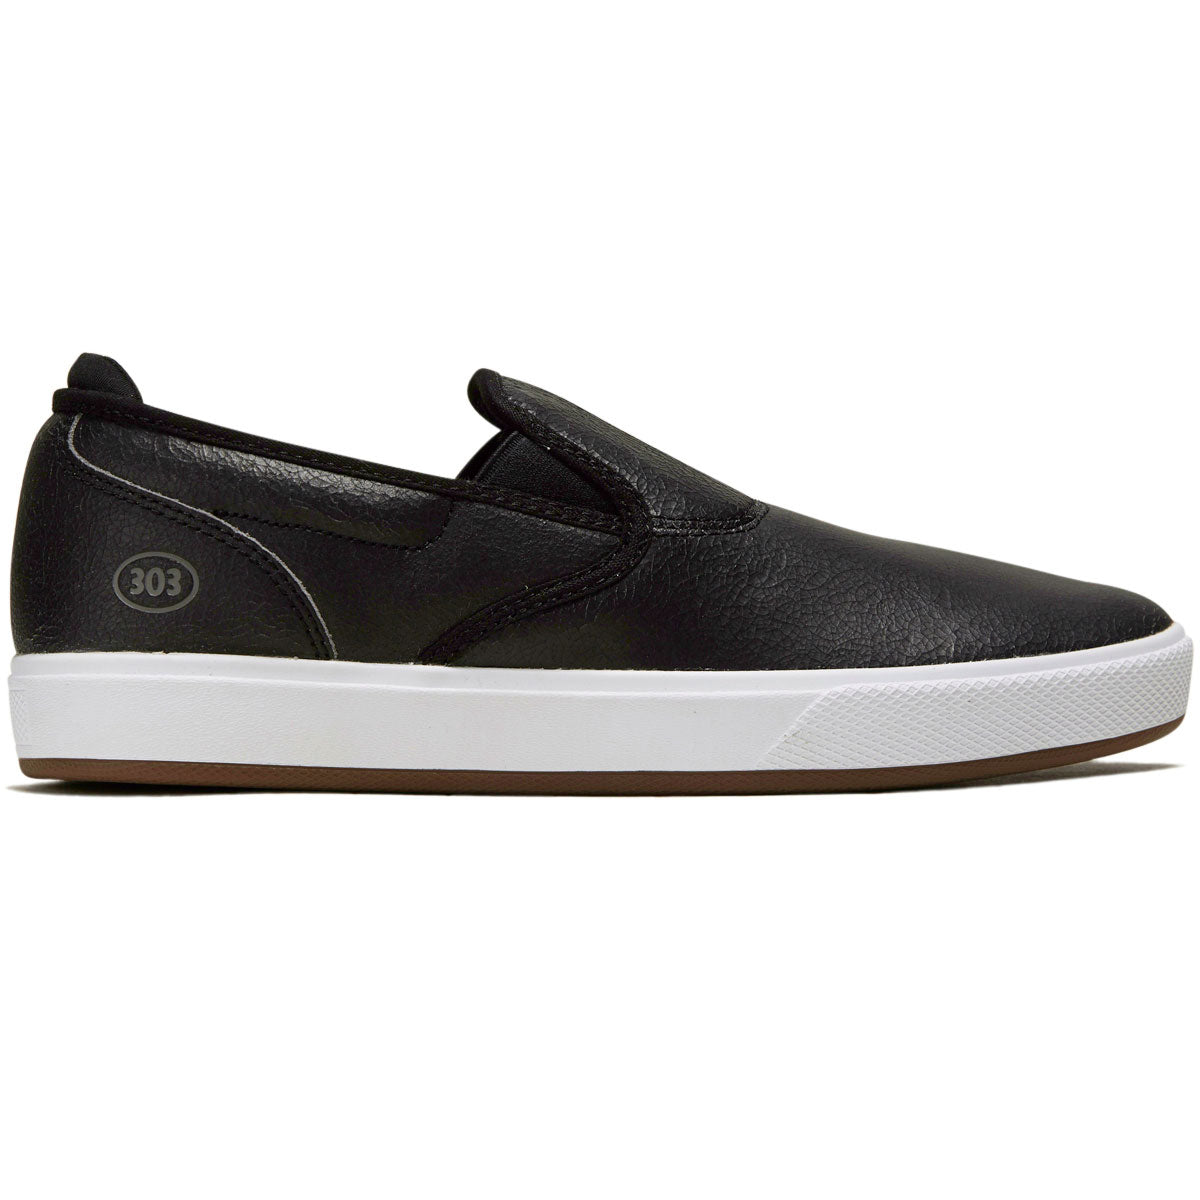 Emerica x 303 Boards Wino G6 Slip Cup Shoes - Black/Grey image 1